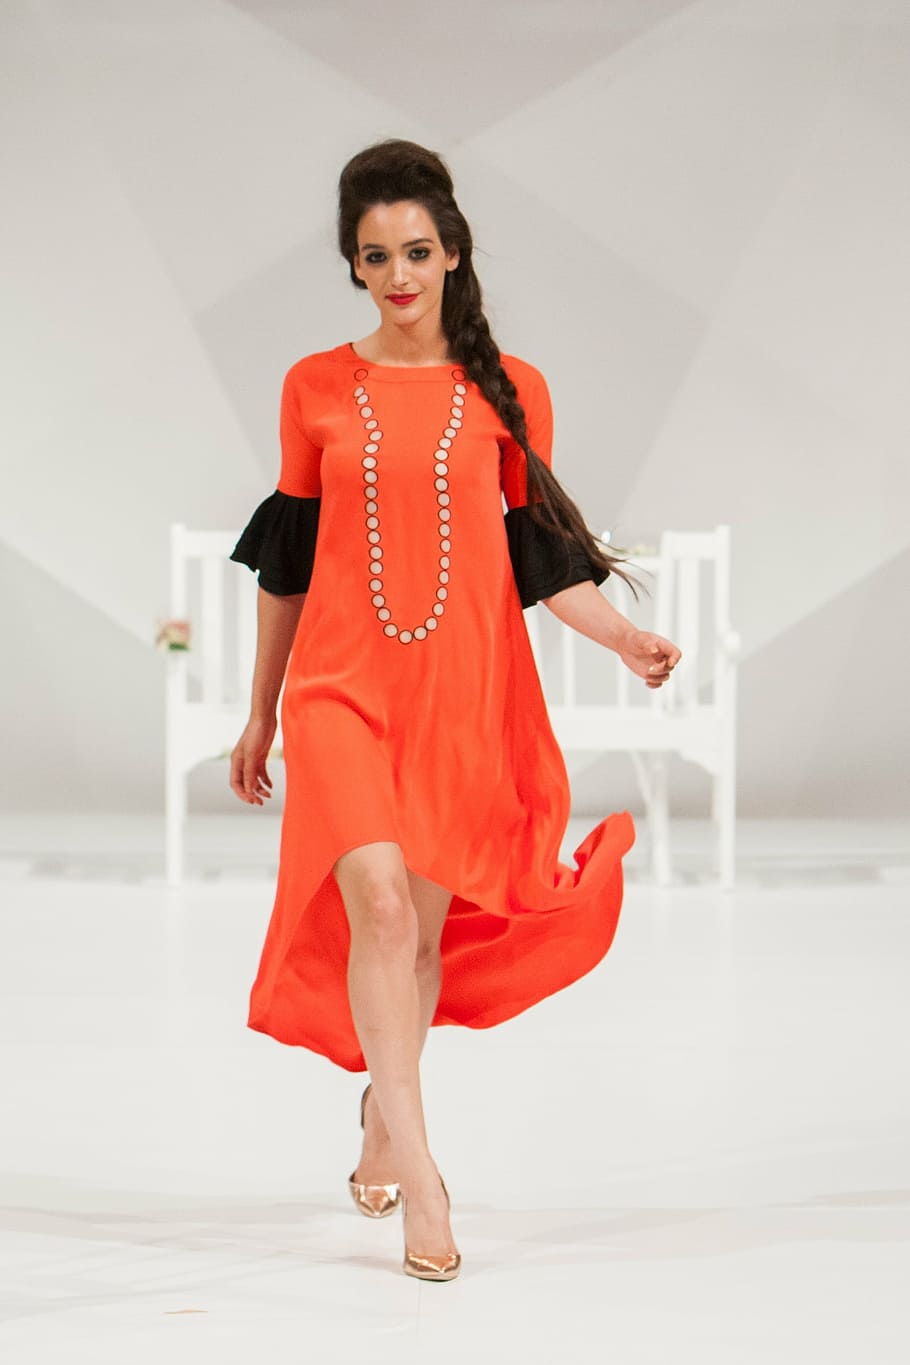 woman wearing orange and black elbow-sleeved maxi dress walking on flooor, HD wallpaper